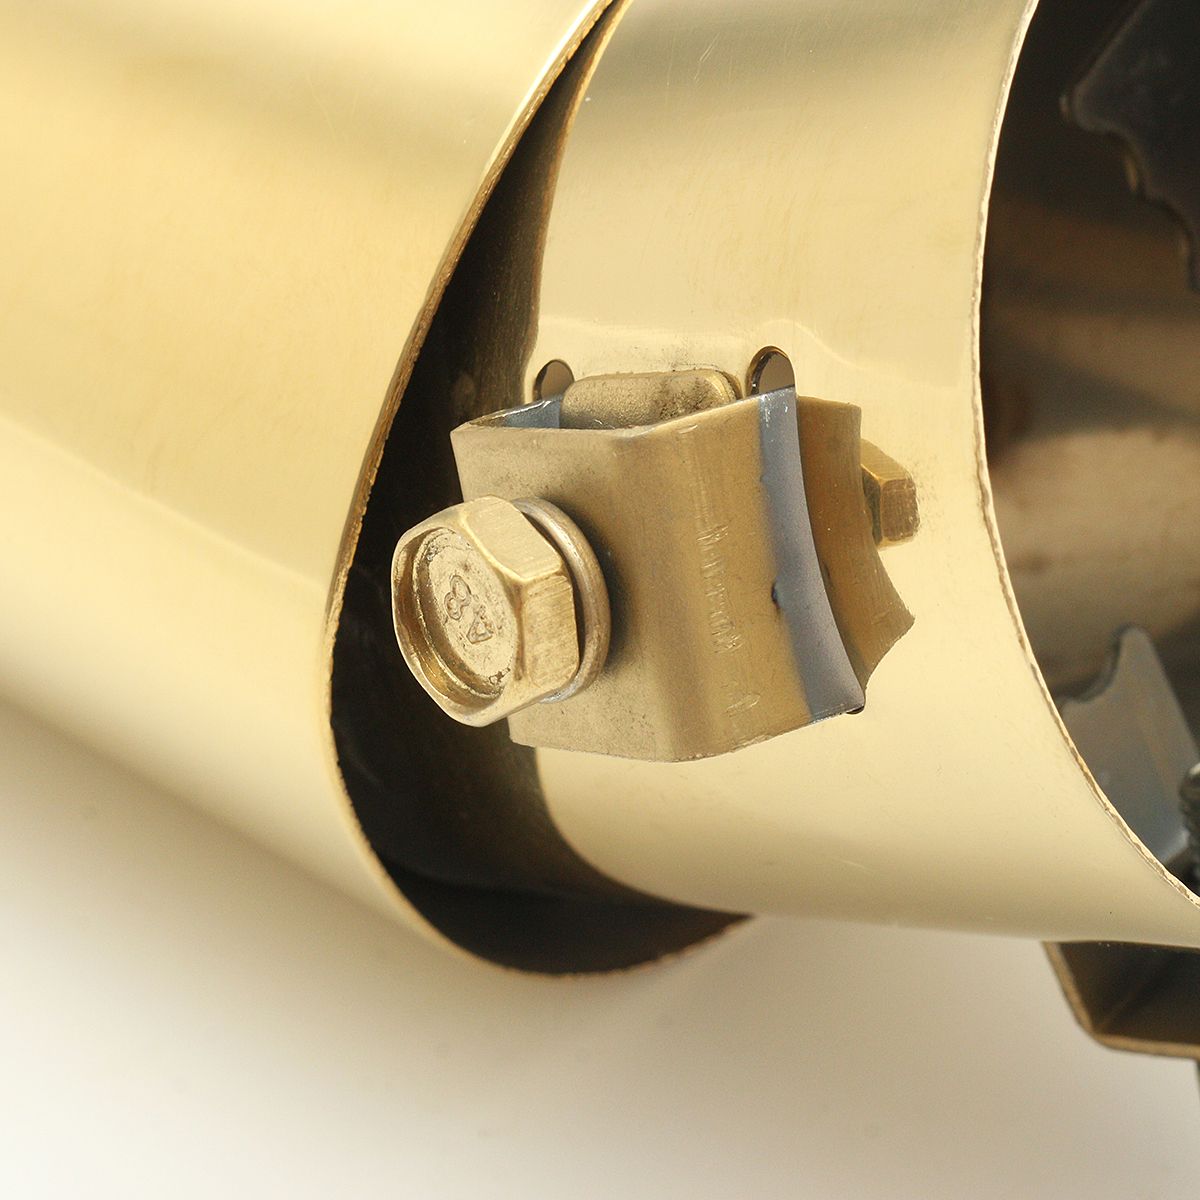 Universal-63mm-Inlet-Exhaust-Muffler-Tip-Silencer-Auto-Gold-Stainless-Steel-1140608